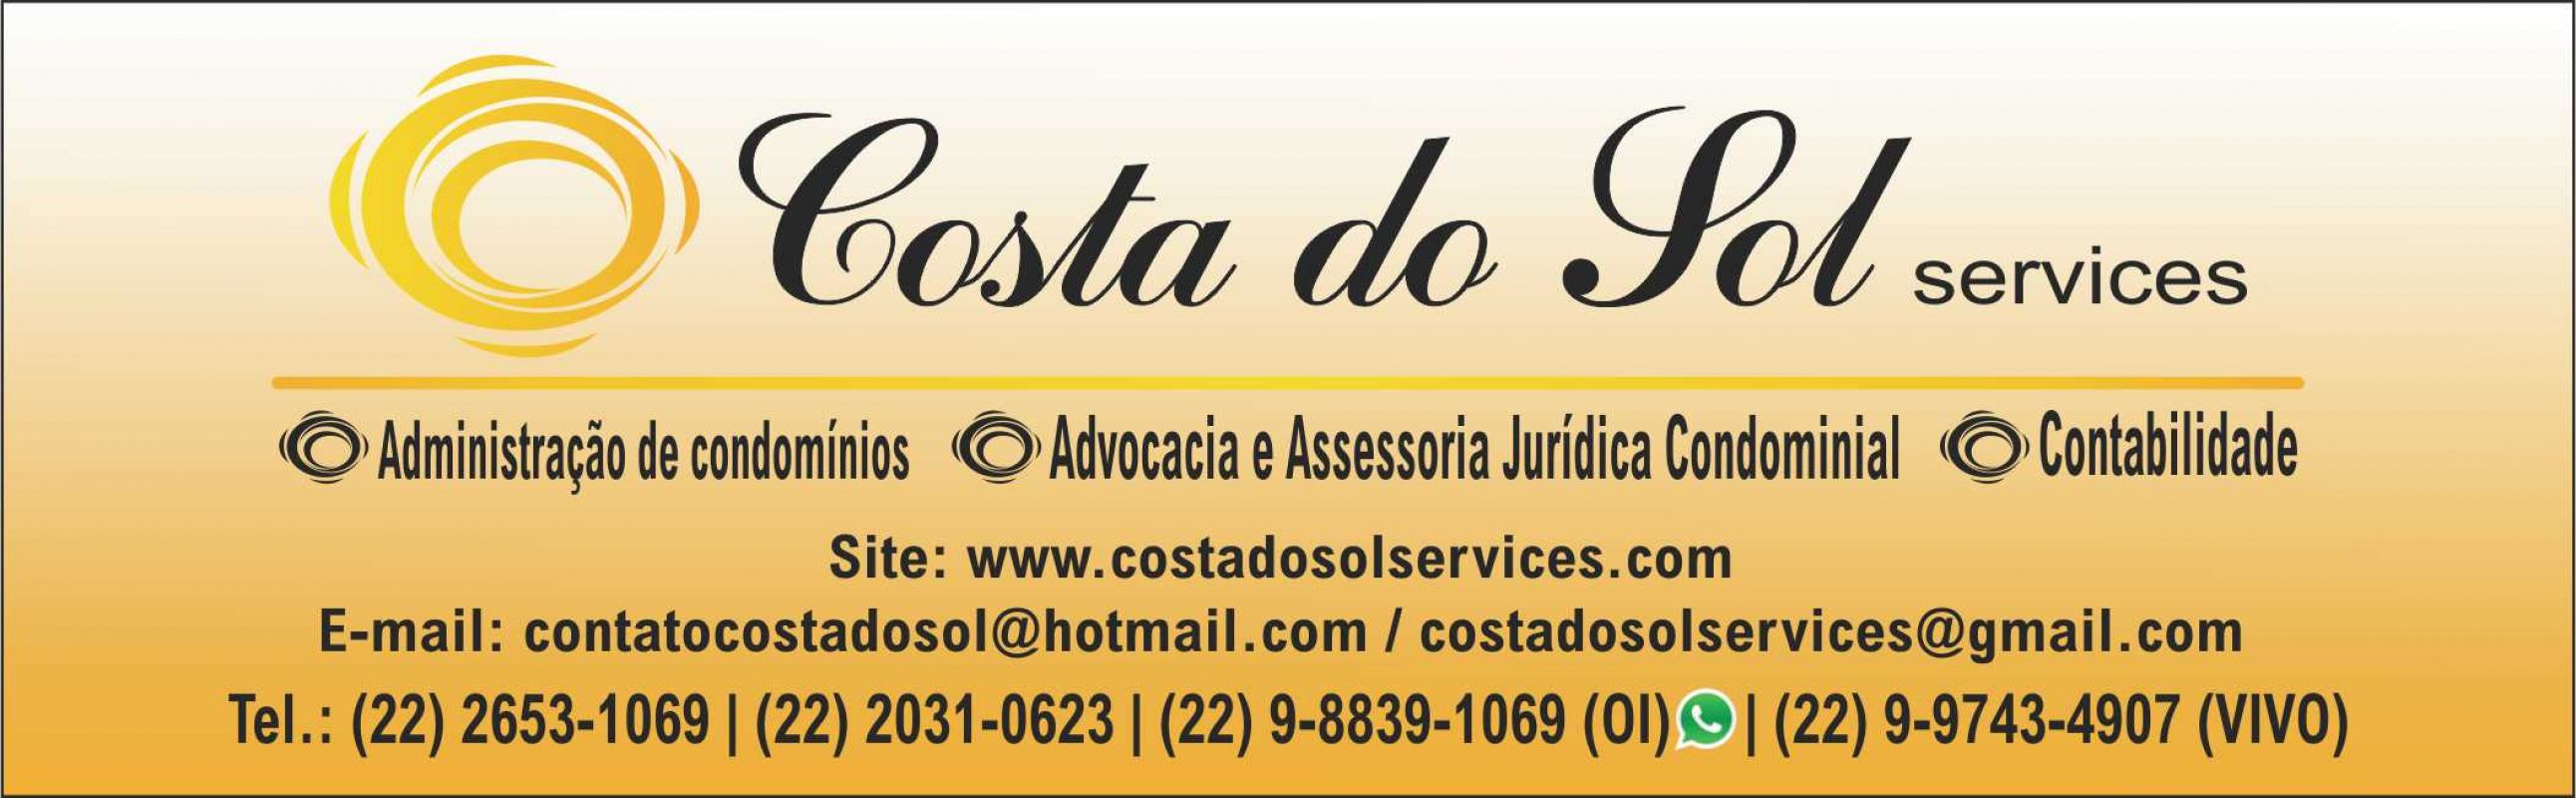 Costa do sol services